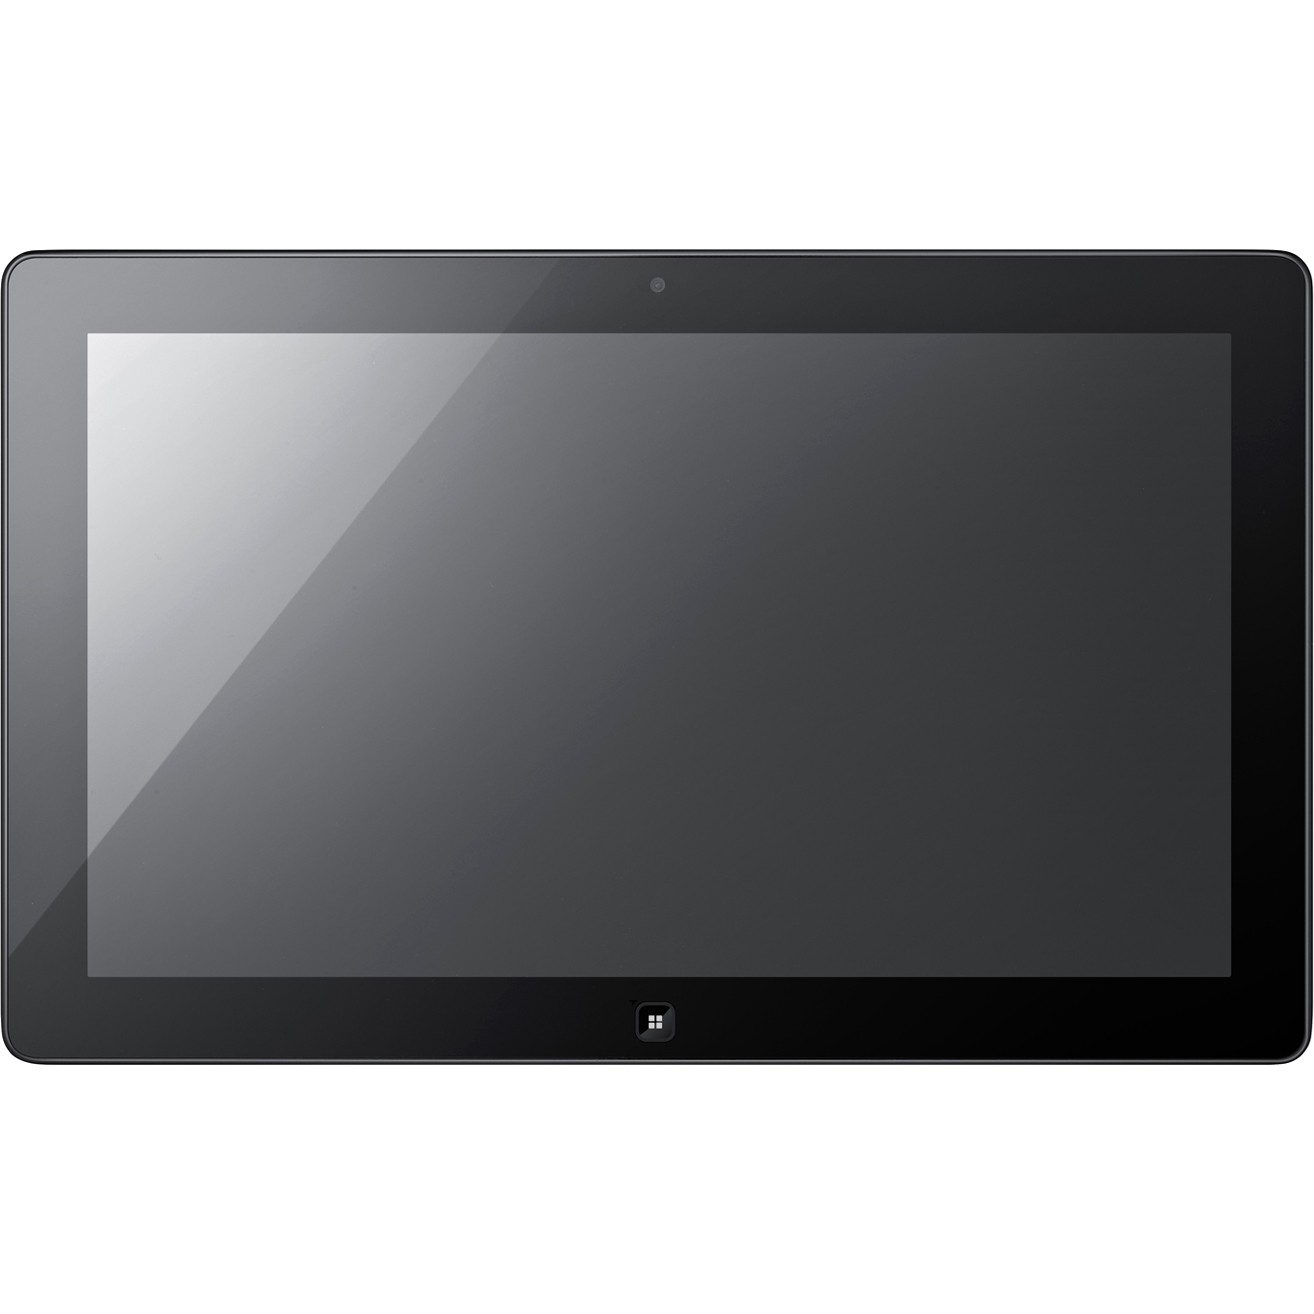 Best Buy Samsung 11 6 Tablet Pc Wi Fi Intel Core I5 I5 2467m 1 60 Ghz Black Xe700t1a